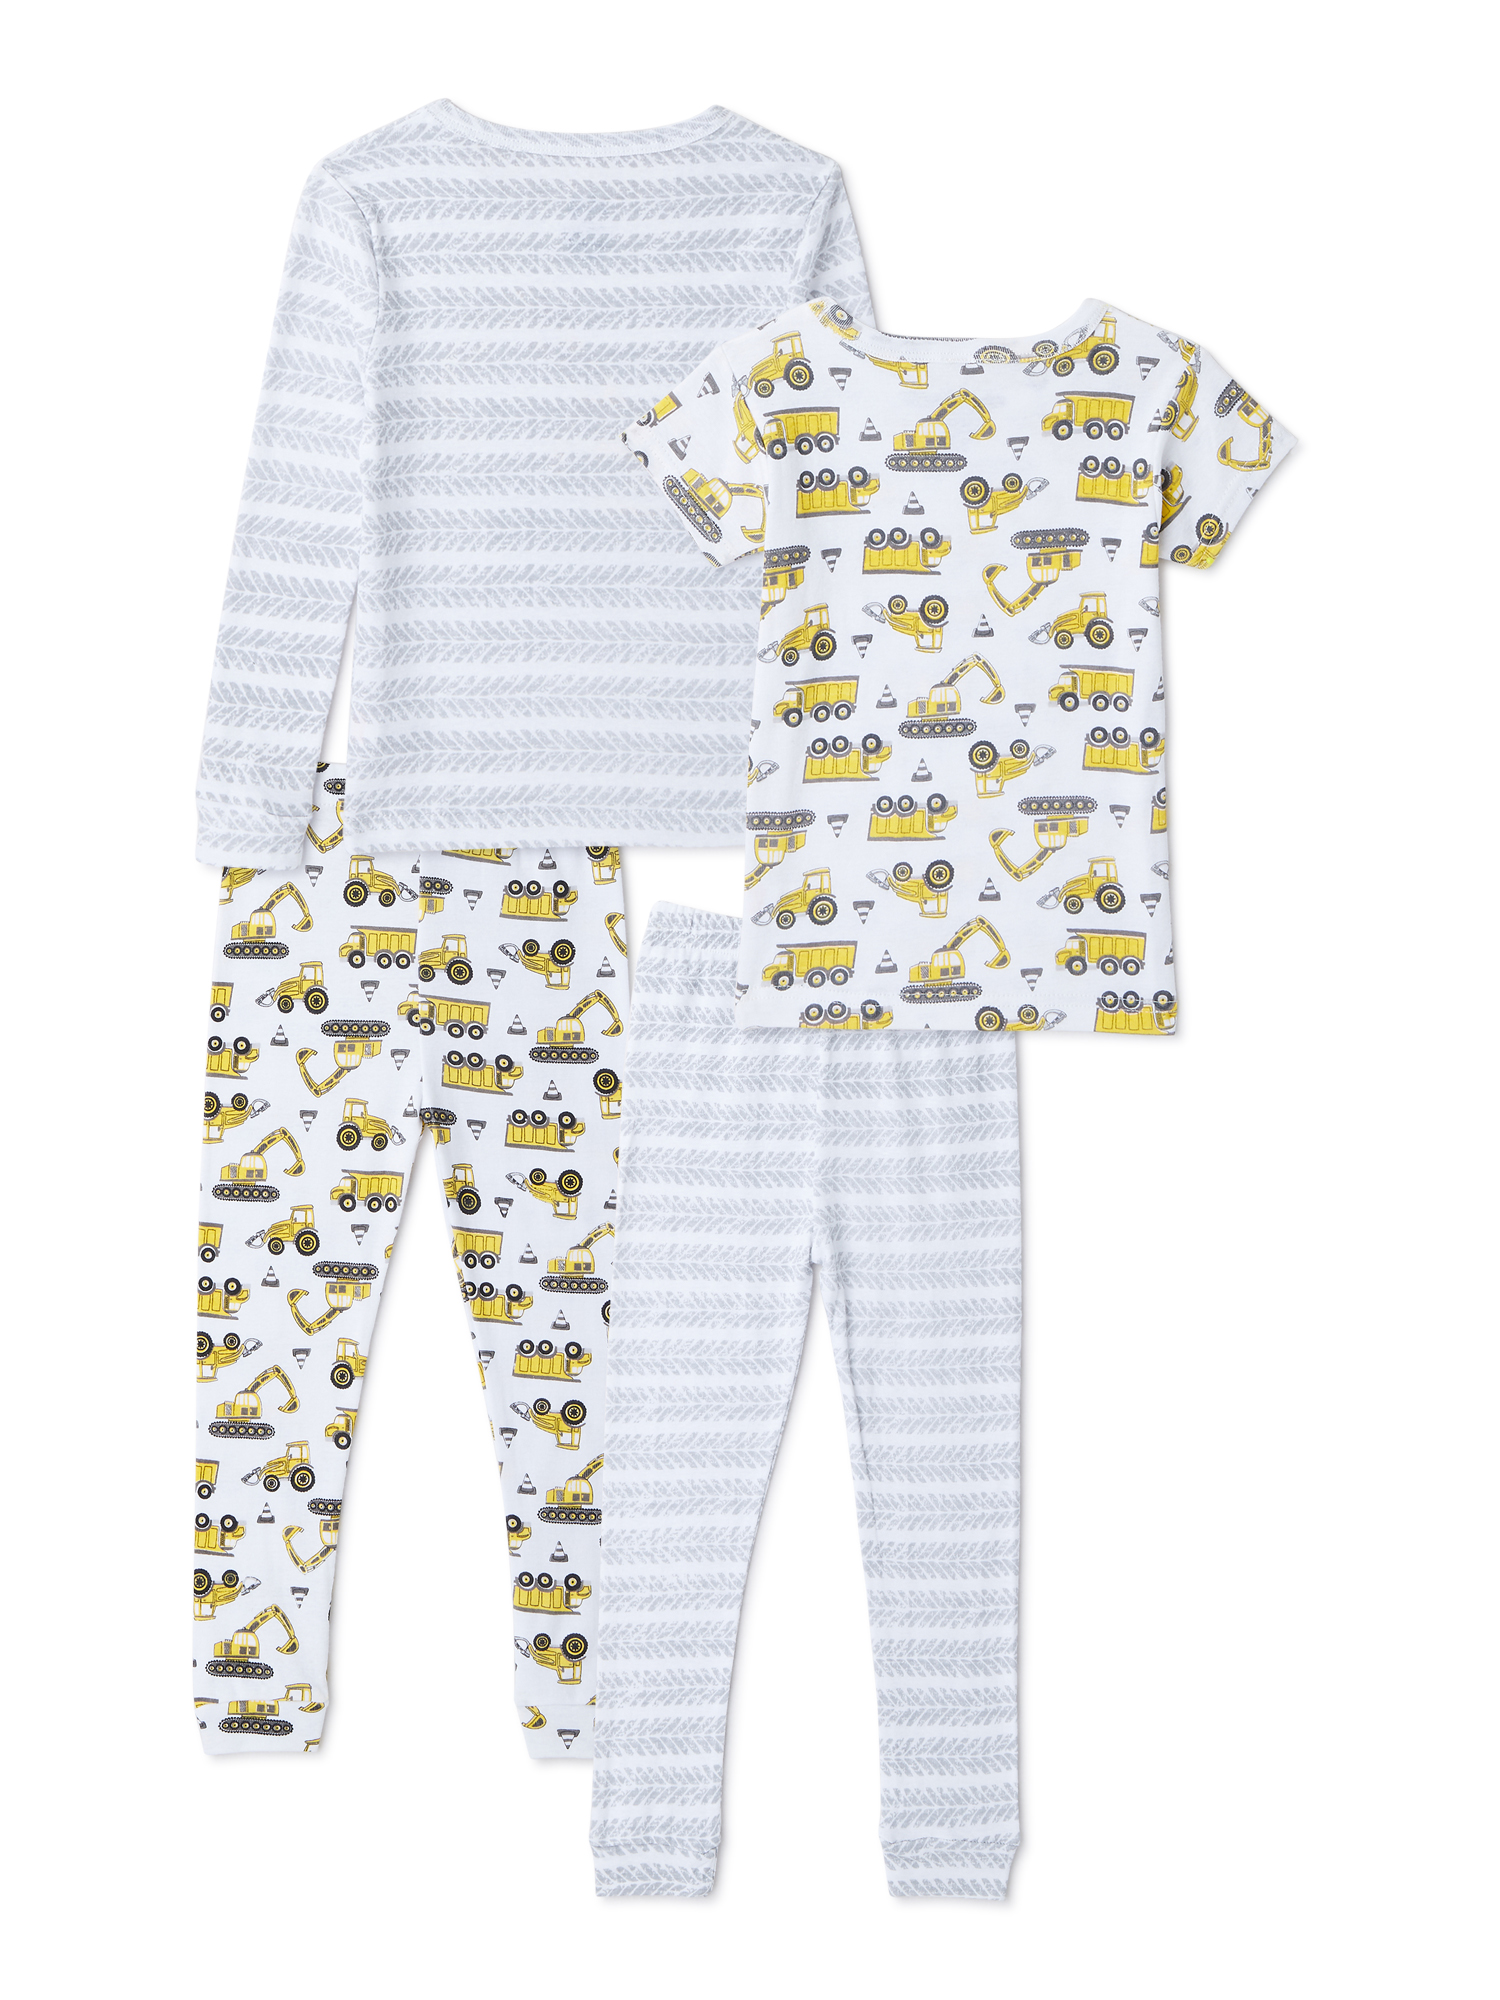 Cutie Pie Baby Toddler Boys Short & Long Sleeve Snug Fit Cotton Pajamas Set, 4-Piece, Size 12 Months-5T - image 2 of 4